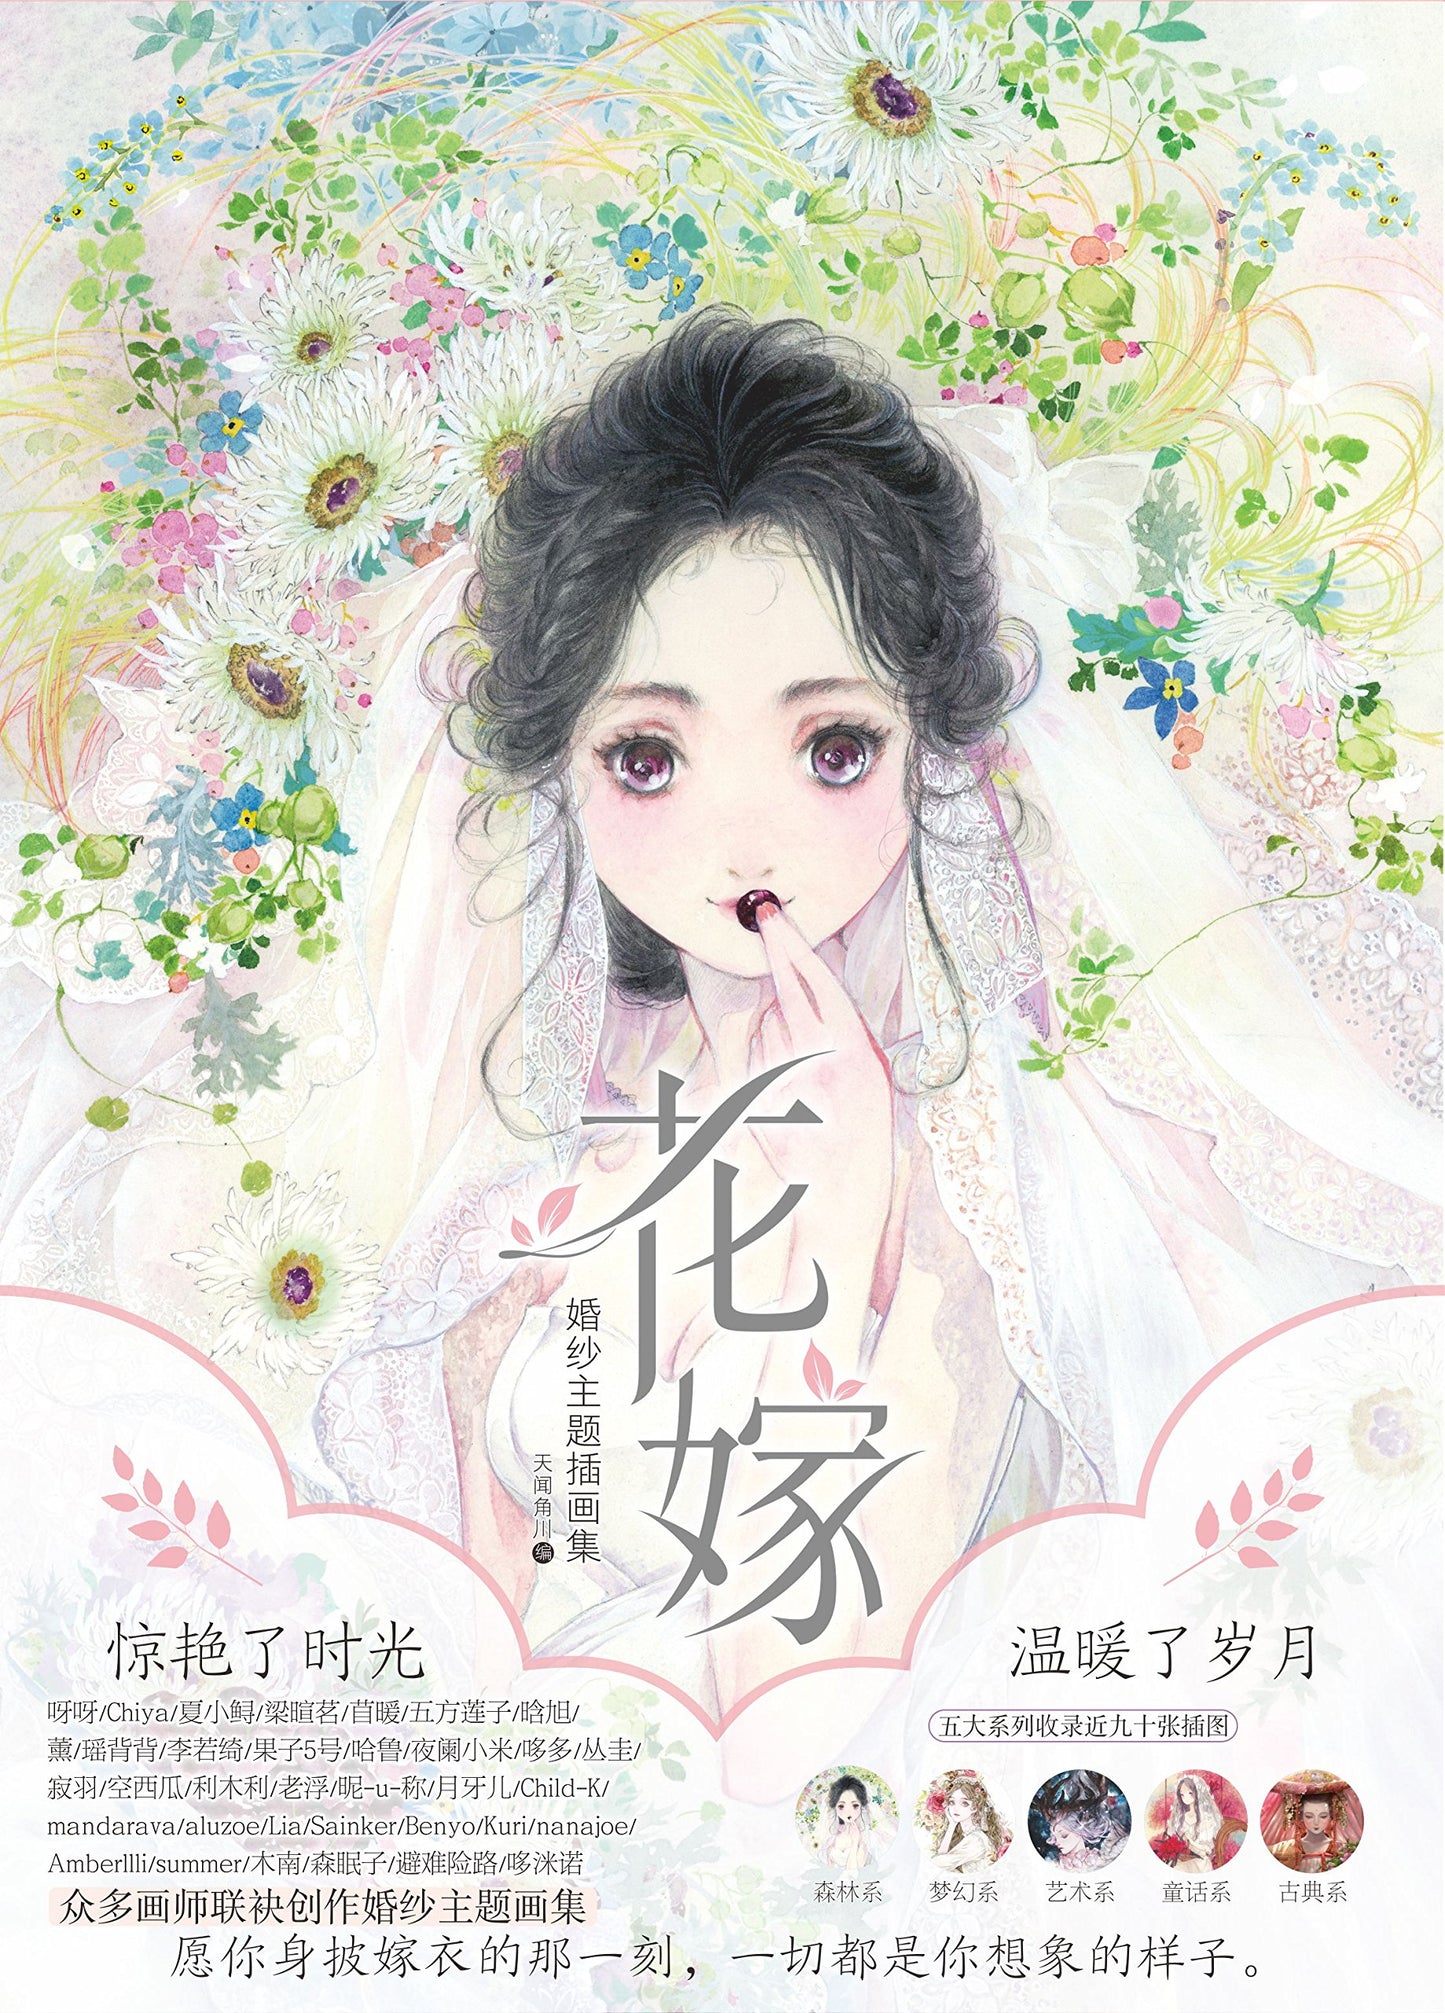 Flower Wedding Art book by Chiya